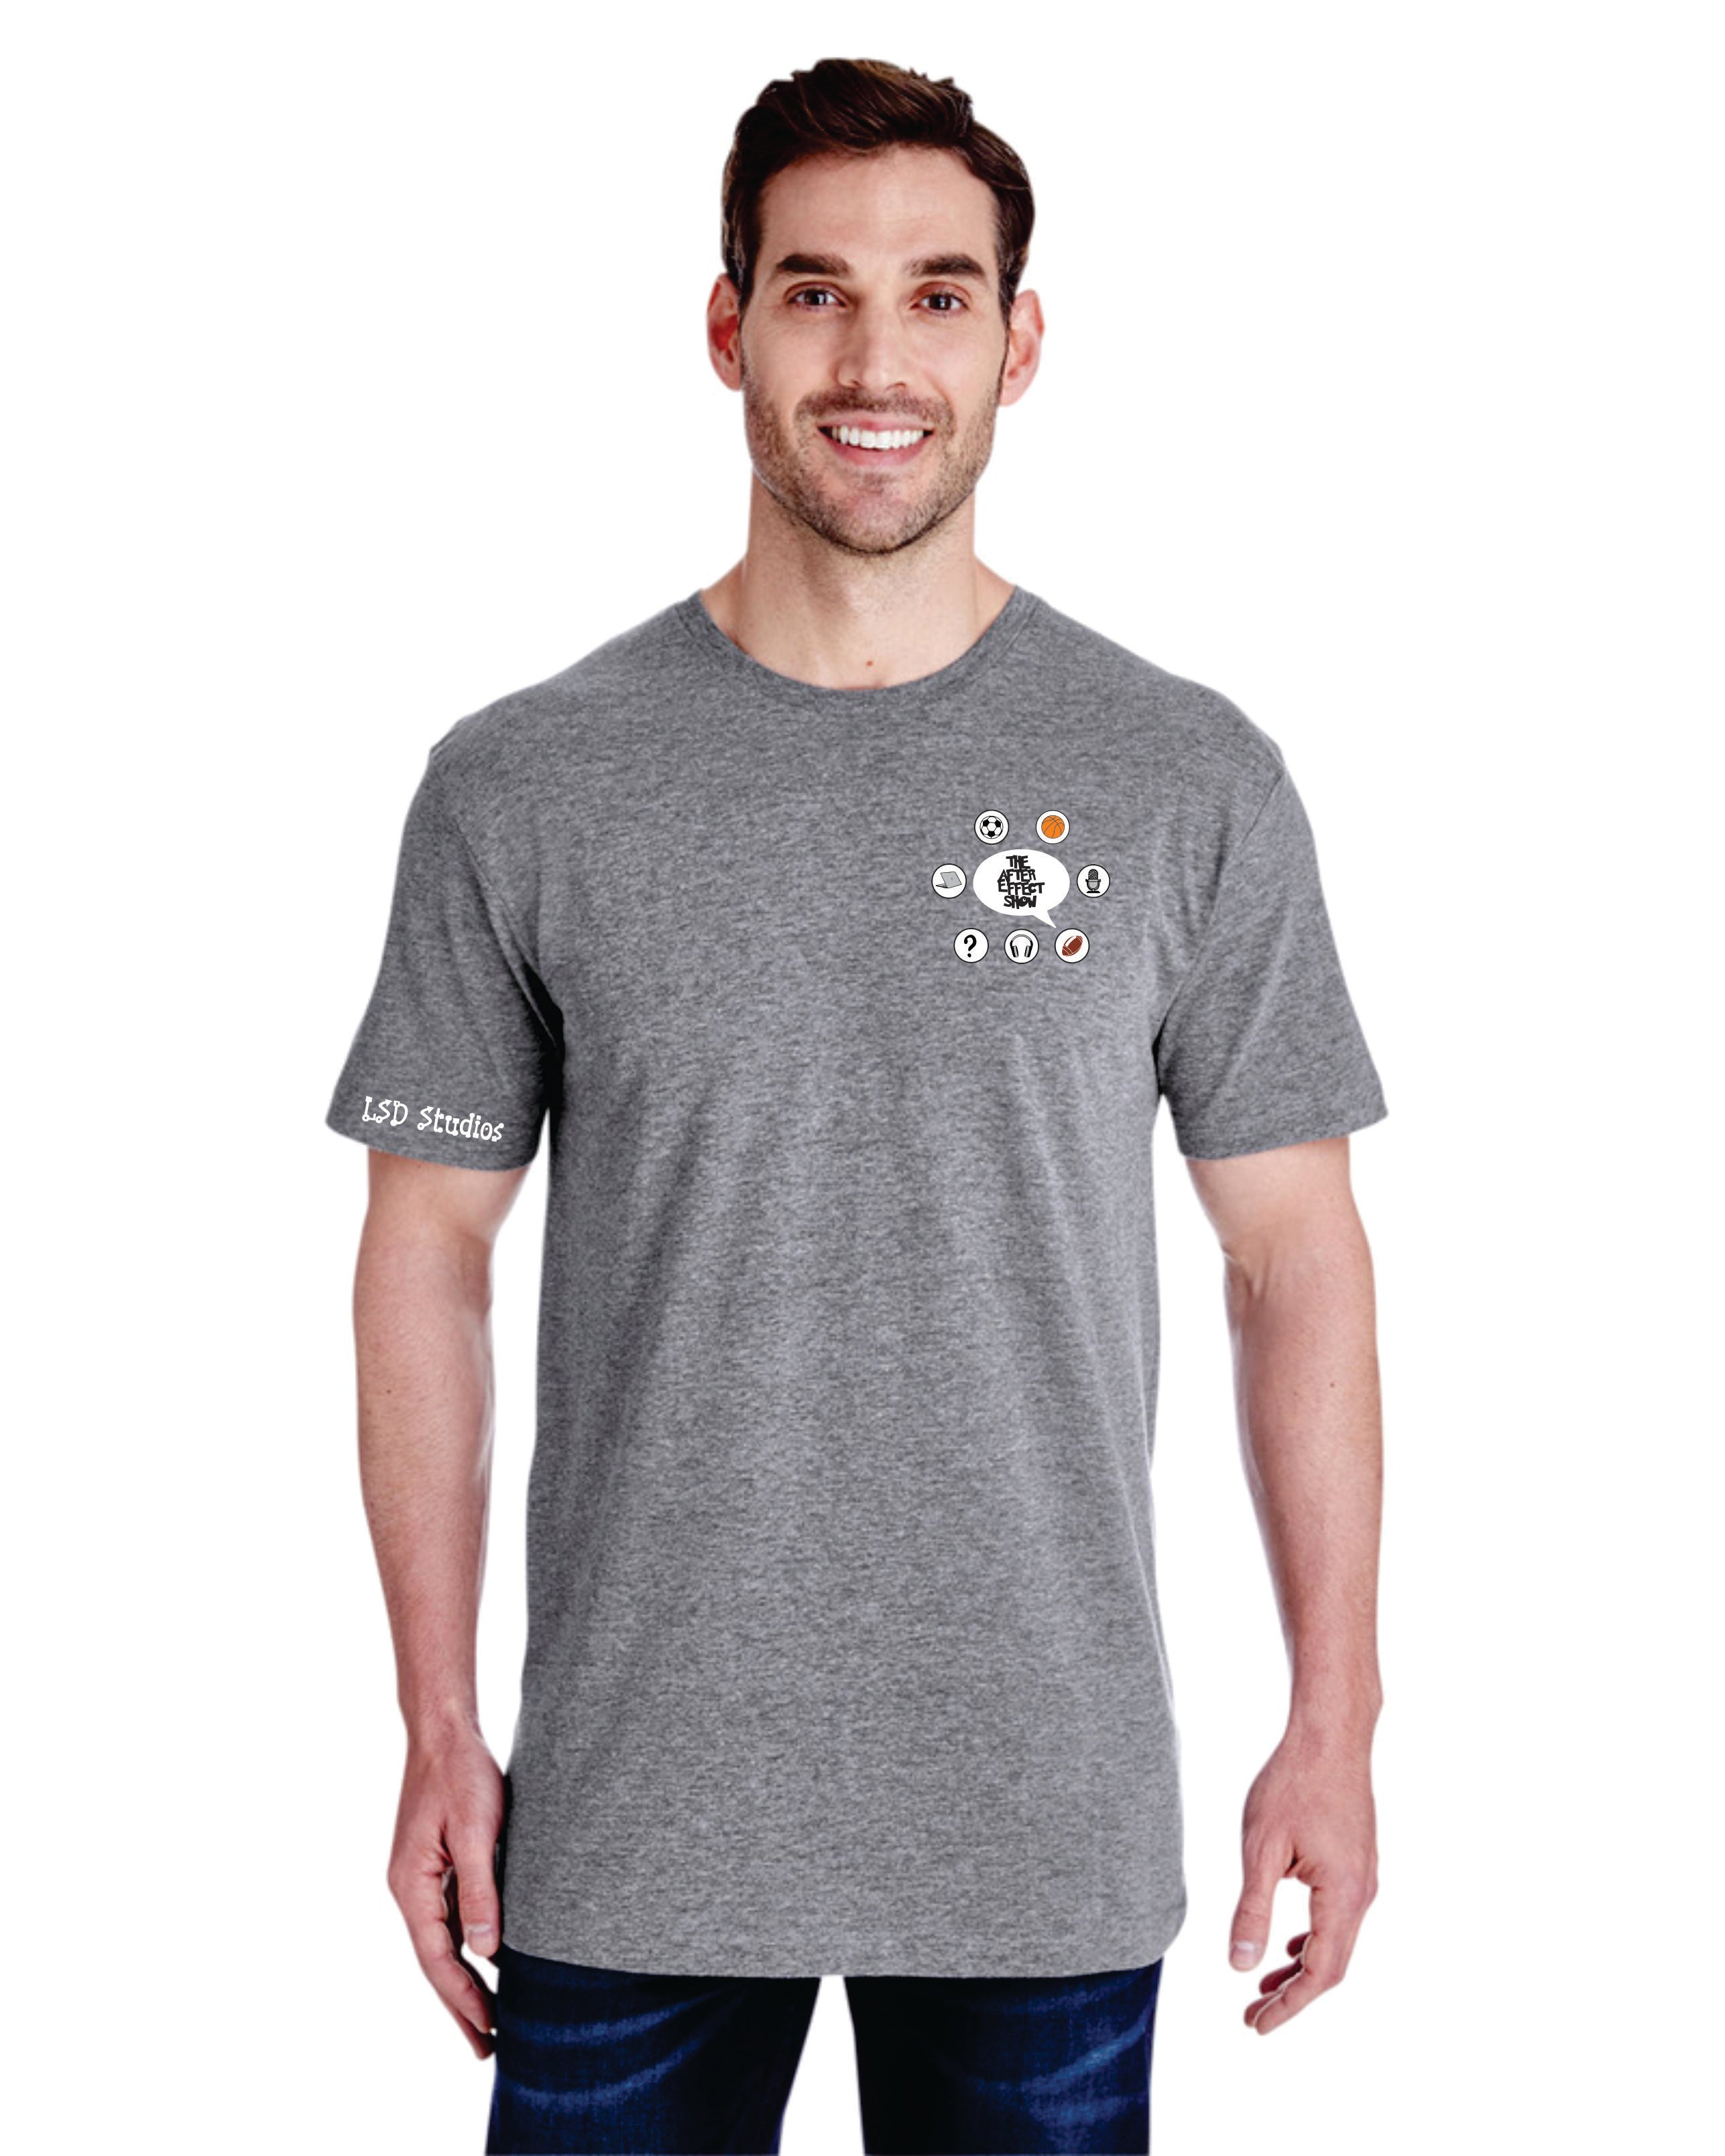 TAE short sleeve t-shirt in grey